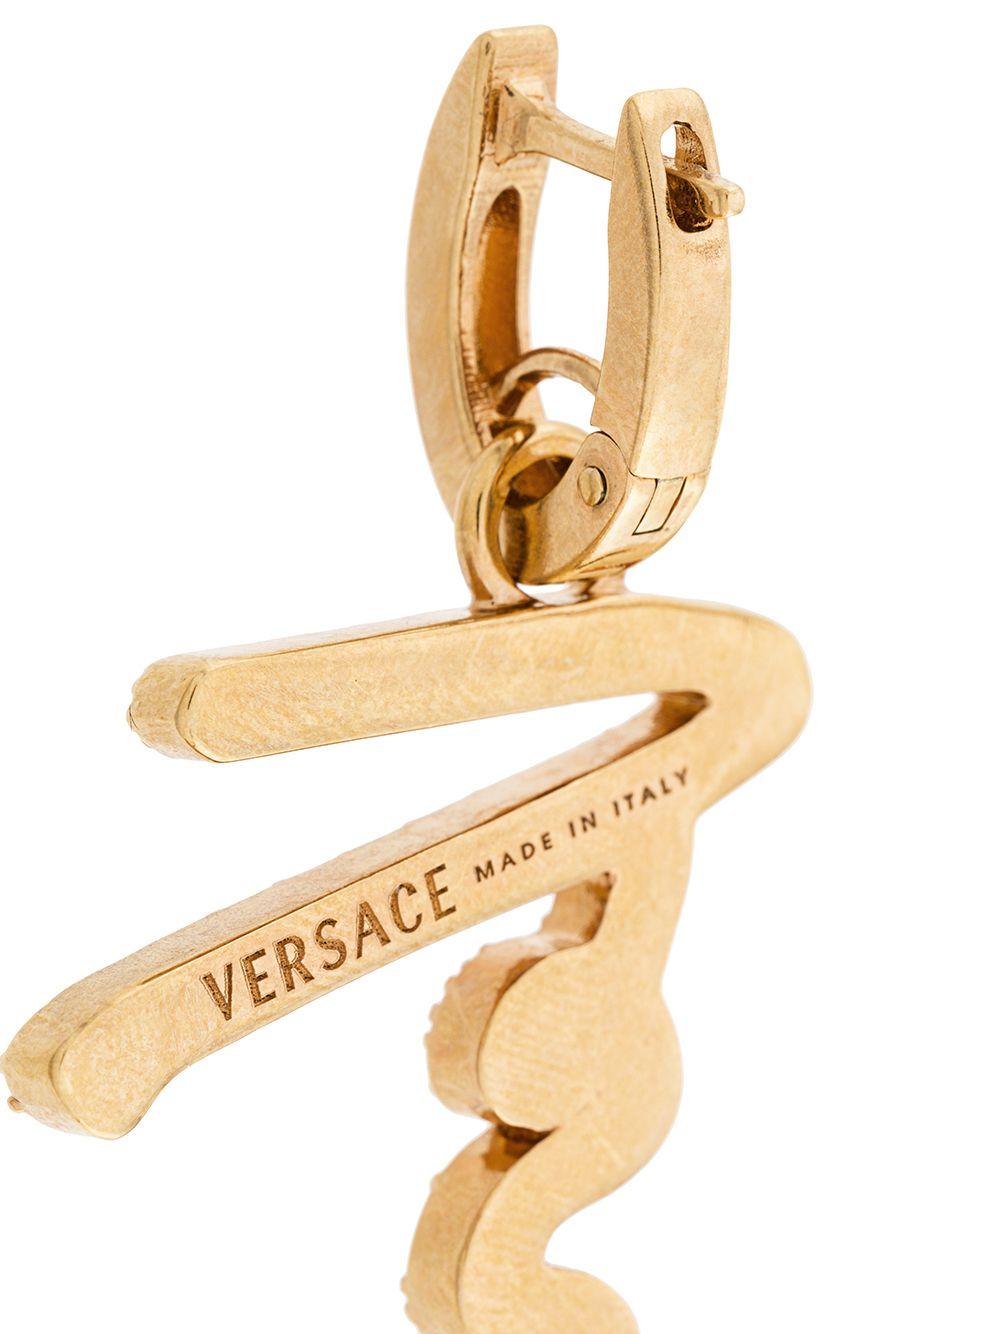 Earrings Gianni Versace Silver in Metal - 25815499